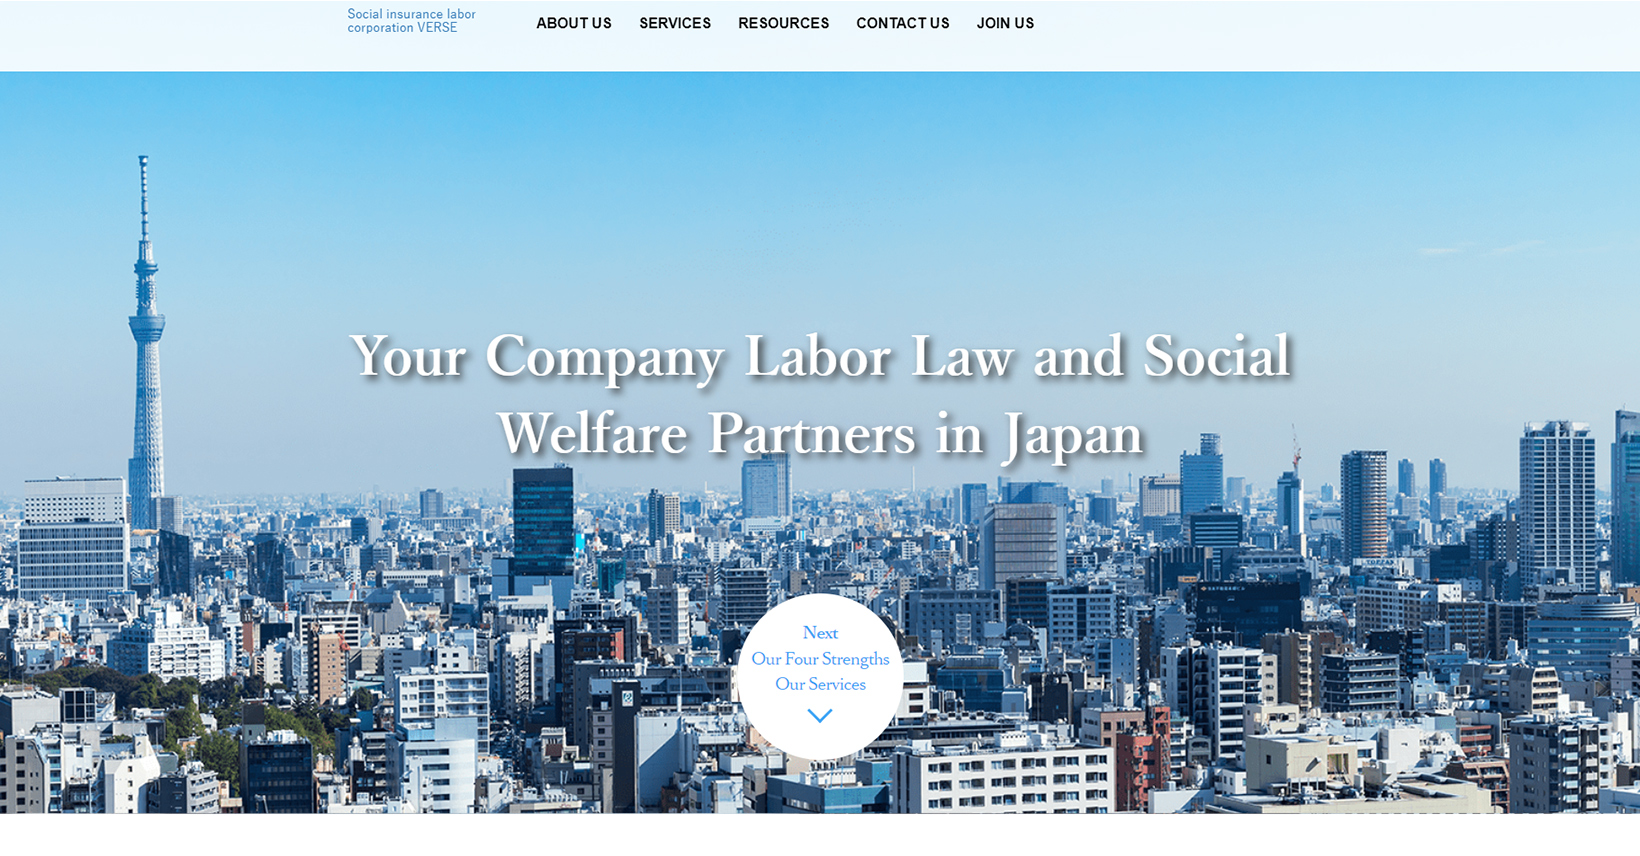 Social insurance labor corporation VERSE